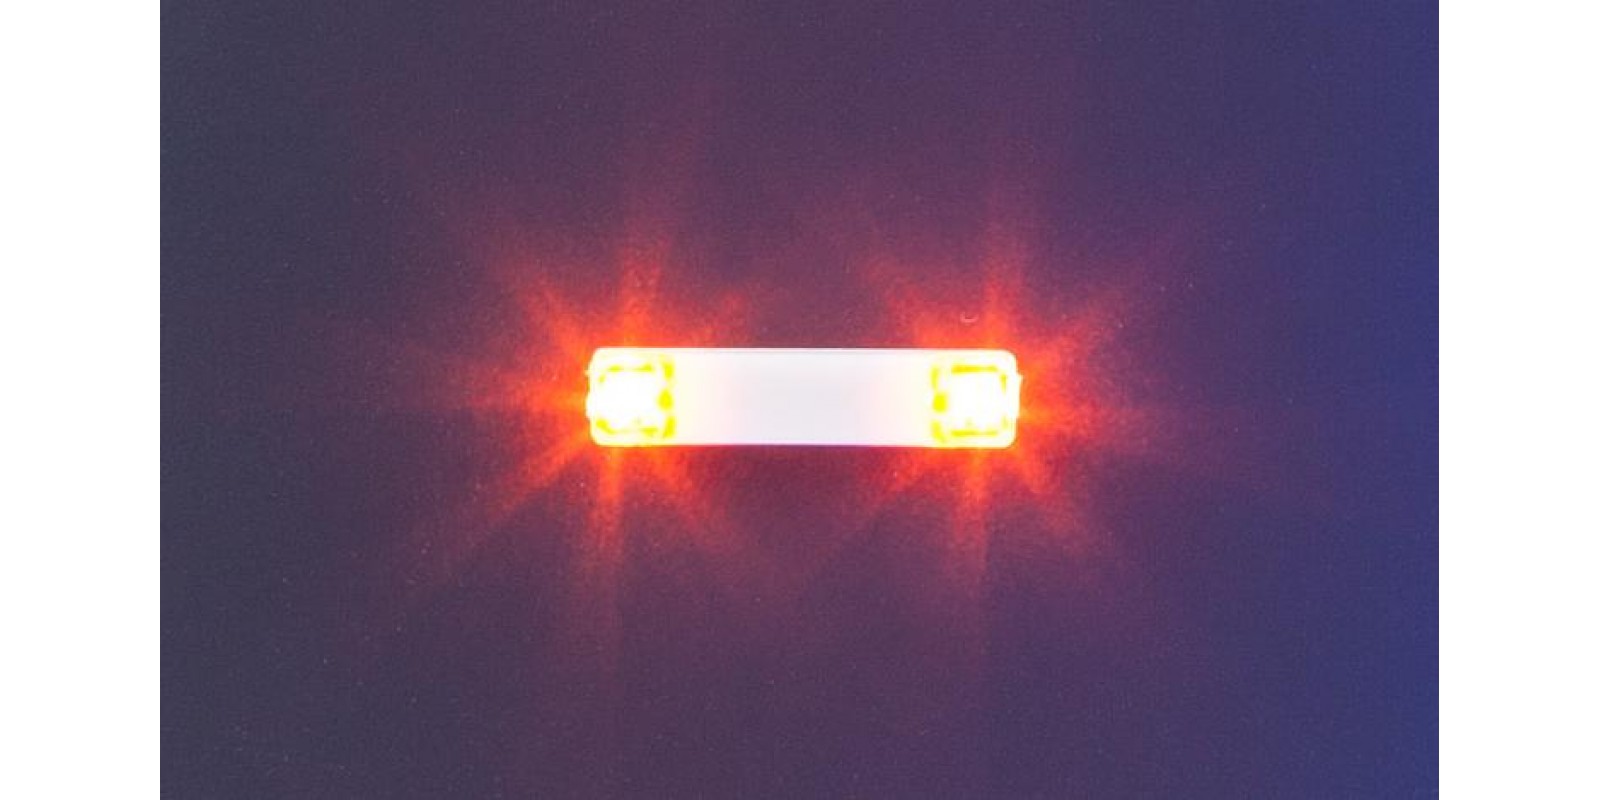 FA163762 Flashing lights, 15.7 mm, orange